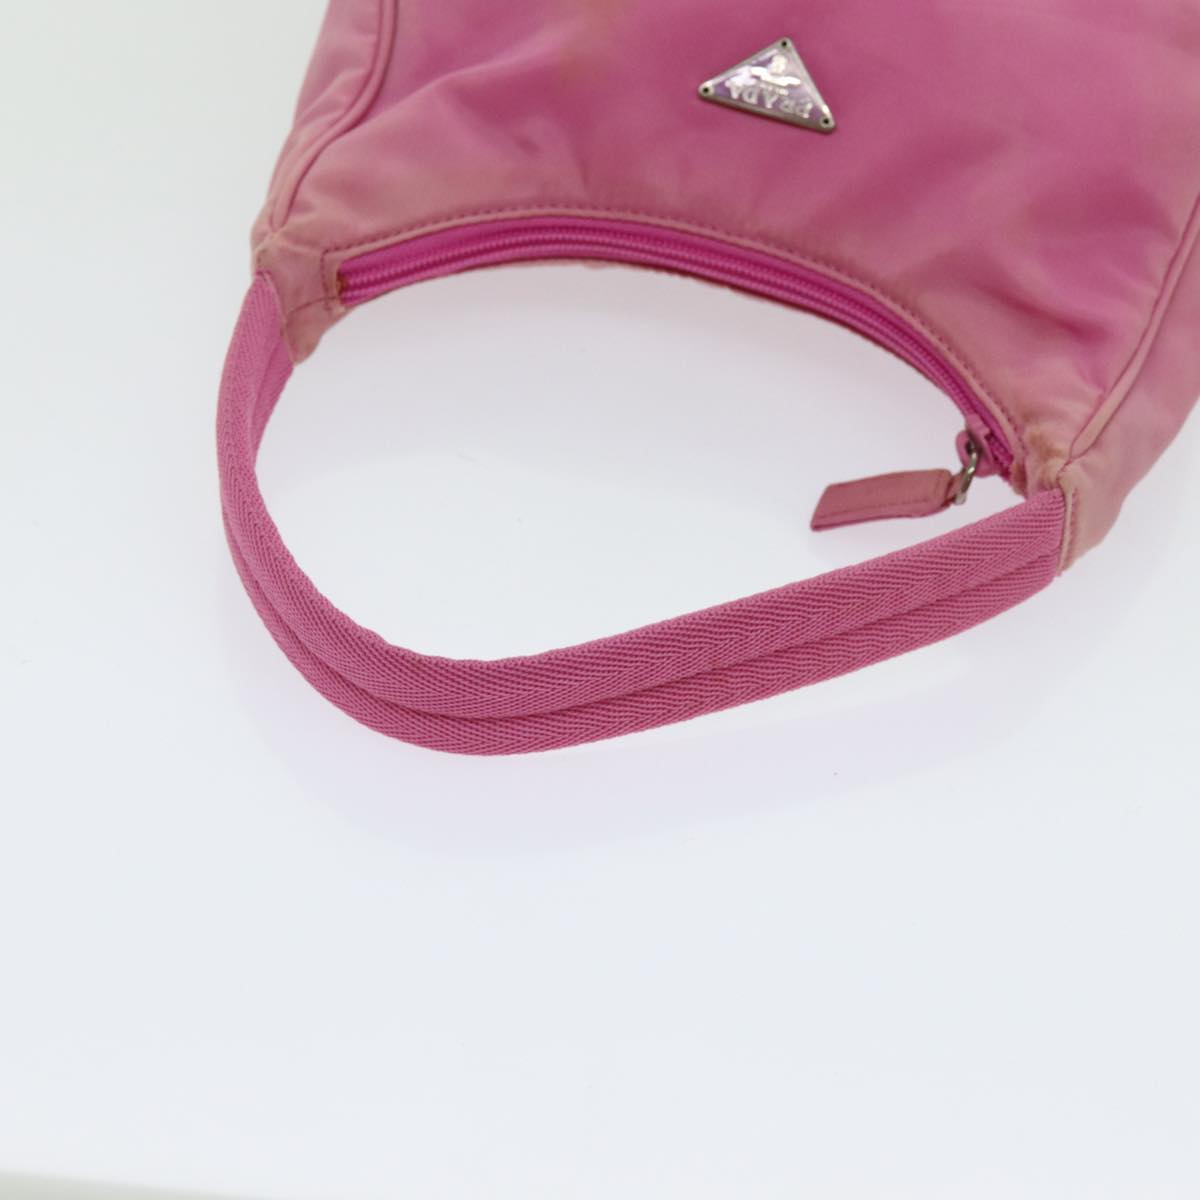 PRADA Hand Bag Nylon Pink Auth 70223